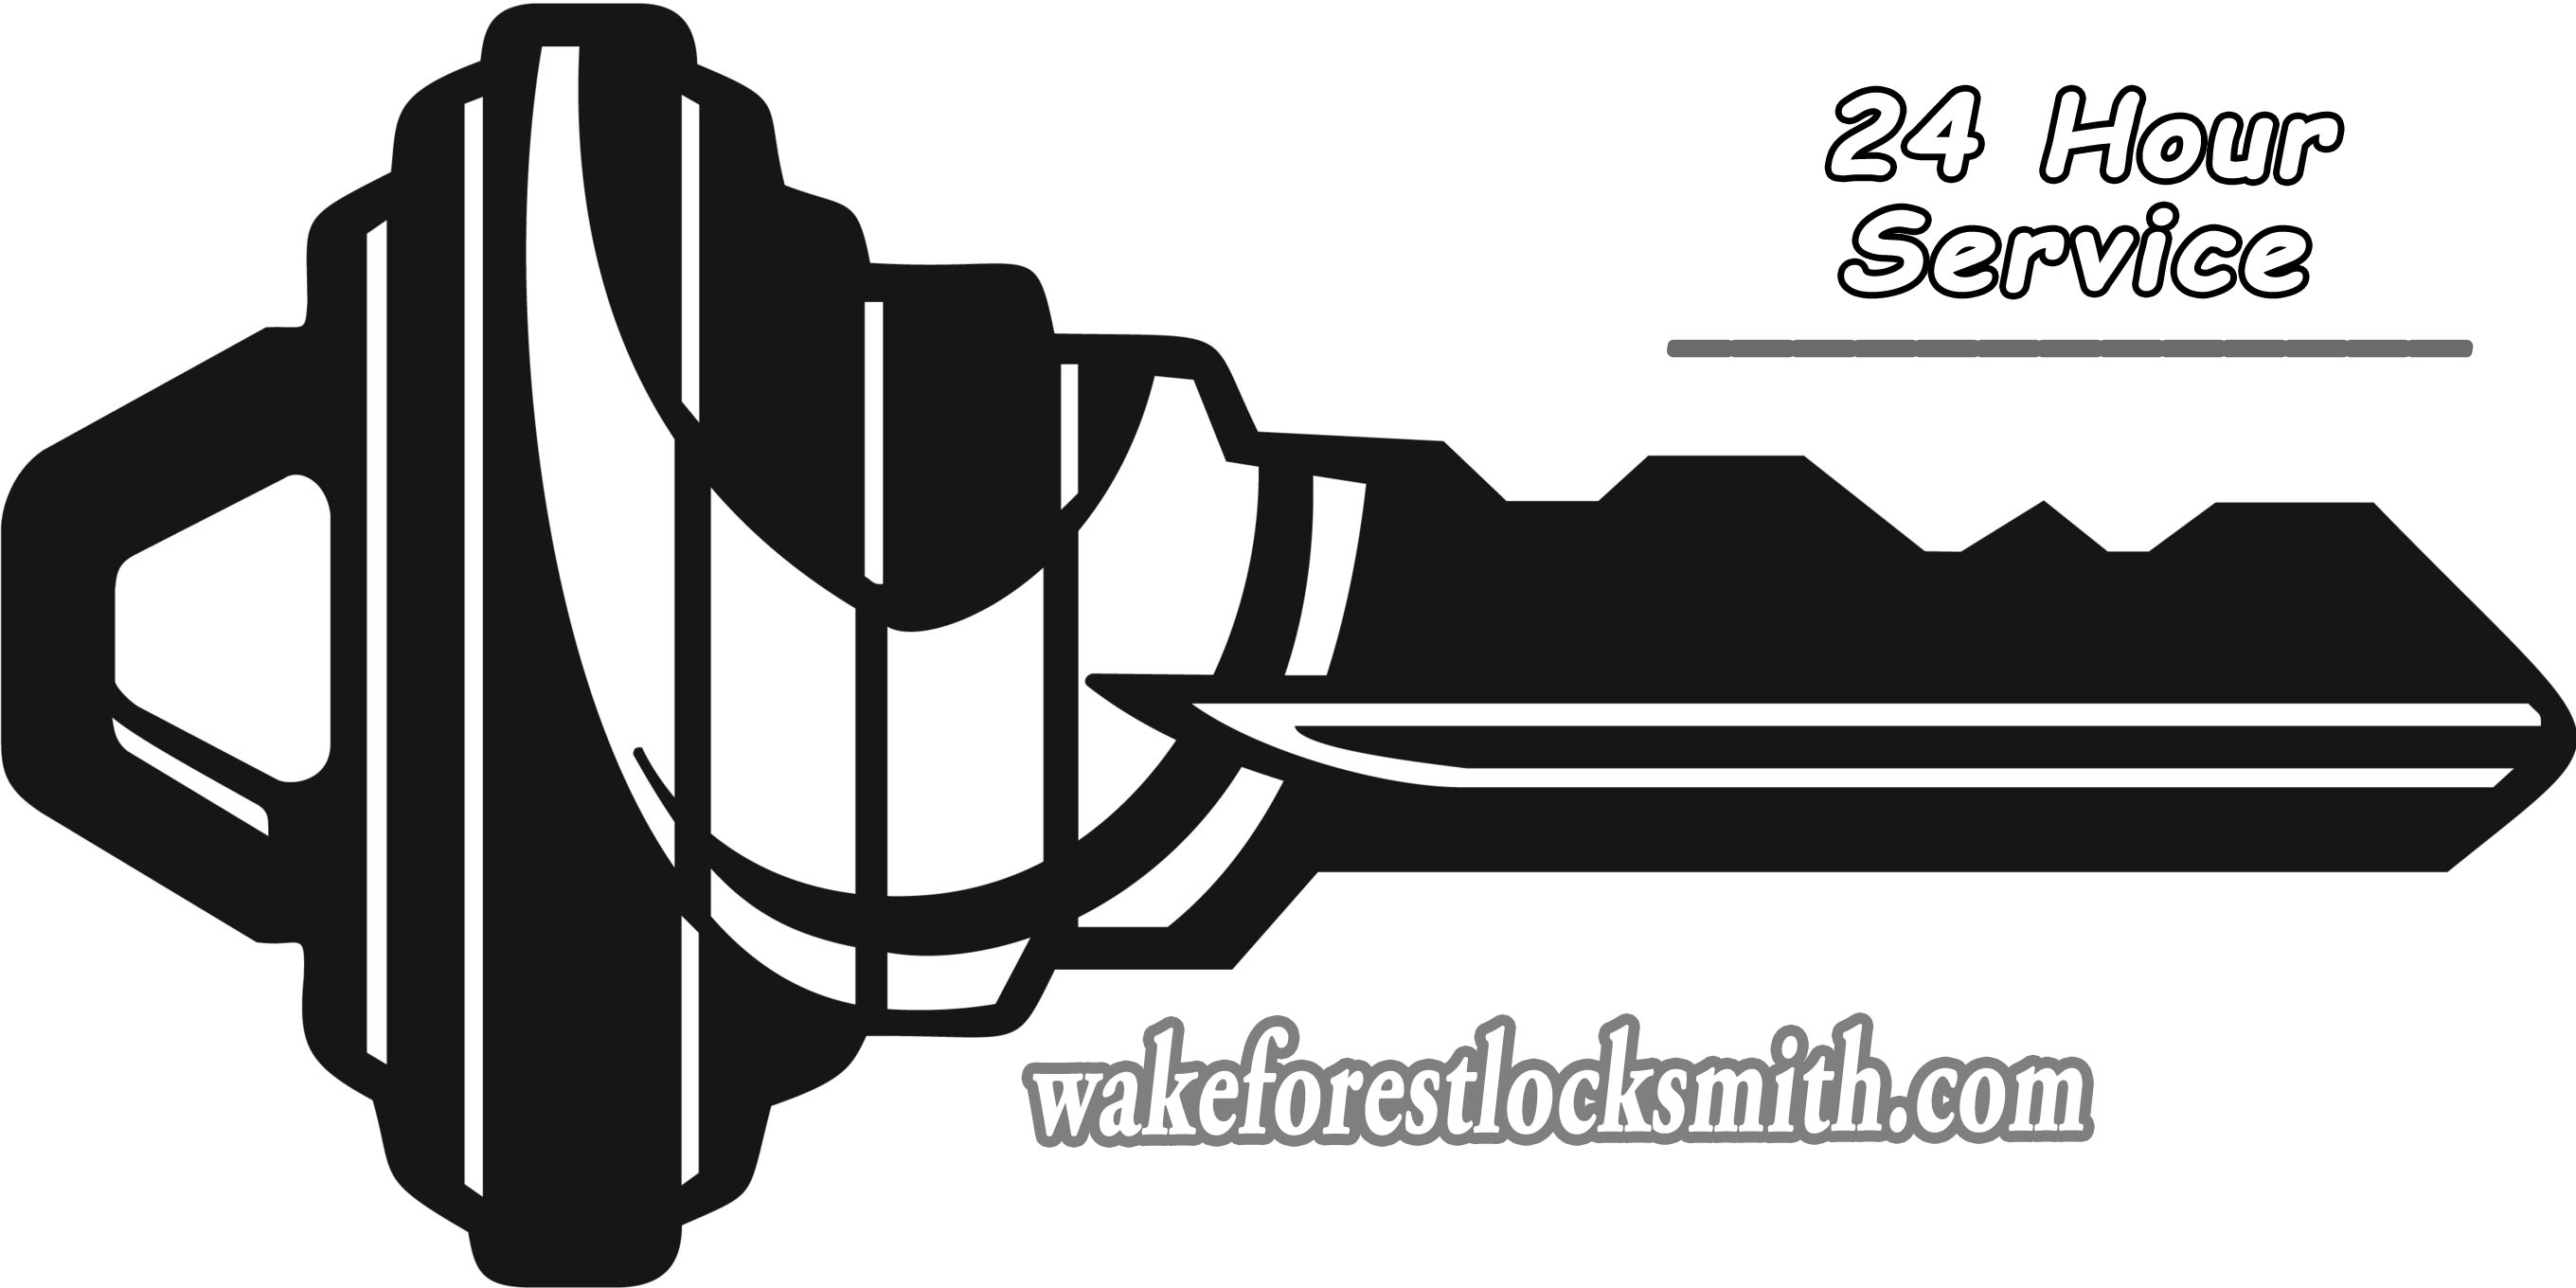 Wake-Forest-locksmith-24-hour-service